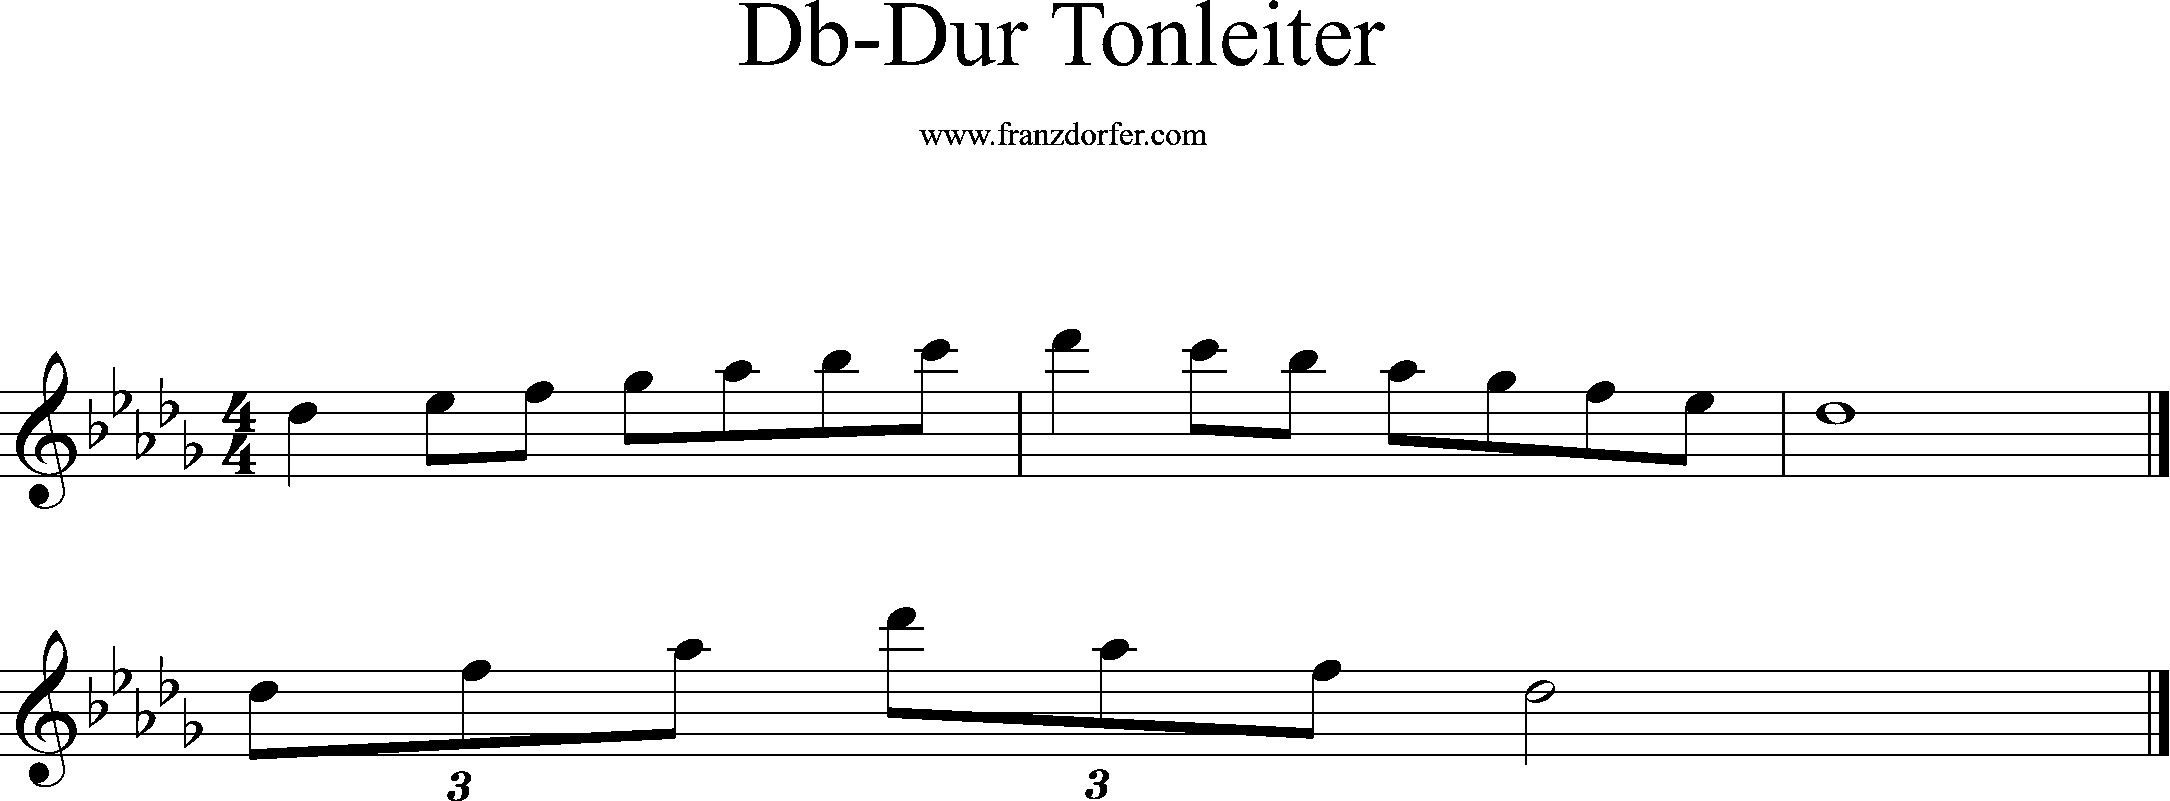 db-dur tonleiter, db2-db3